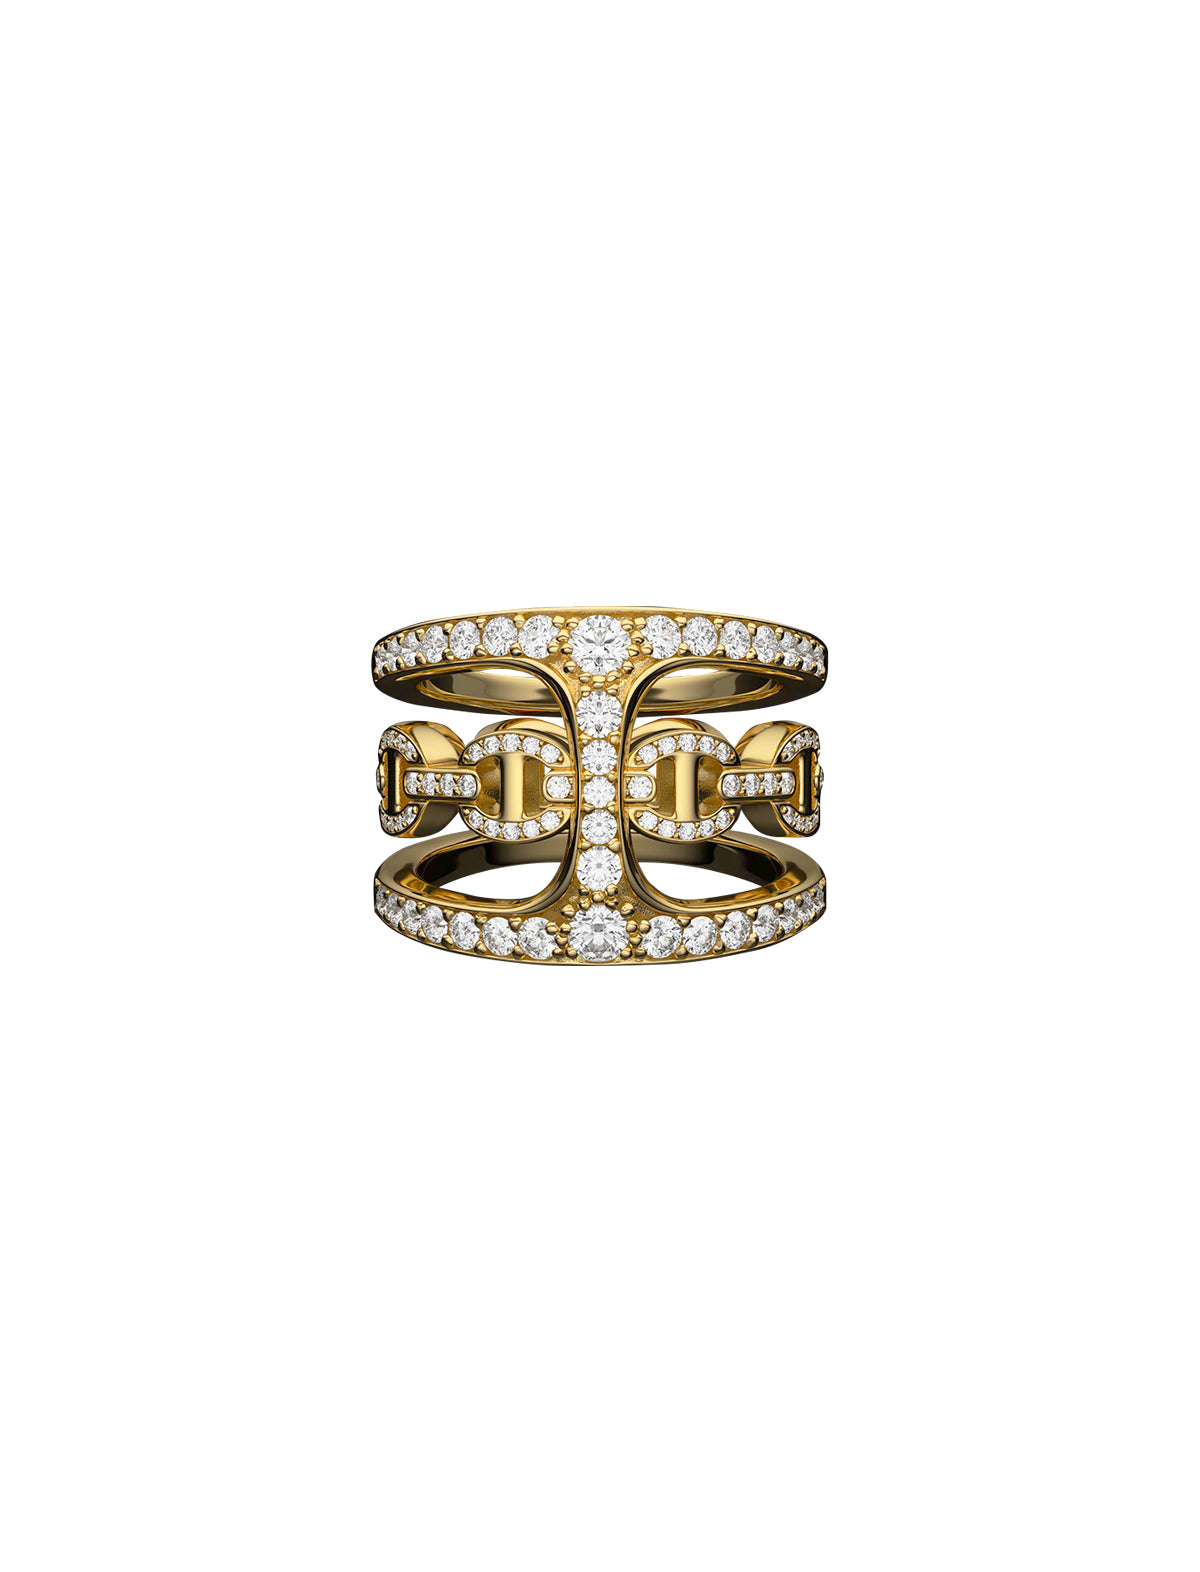 HOORSENBUHS Dame Phantom Clique Antiquated Ring 18k Yellow Gold